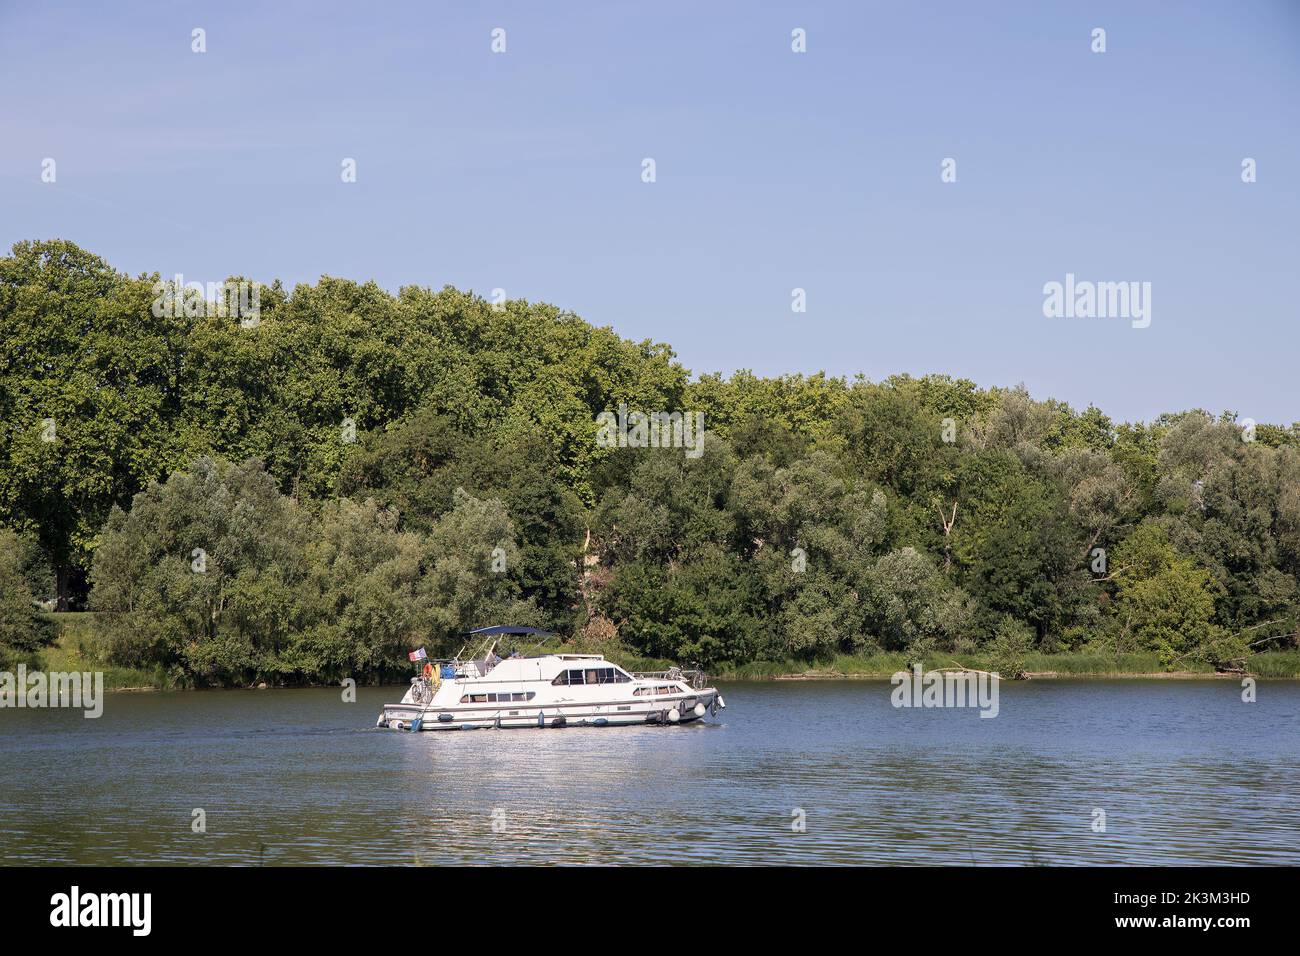 Pleasure boat on the River Saone, Jassans-Riottier, France Stock Photo